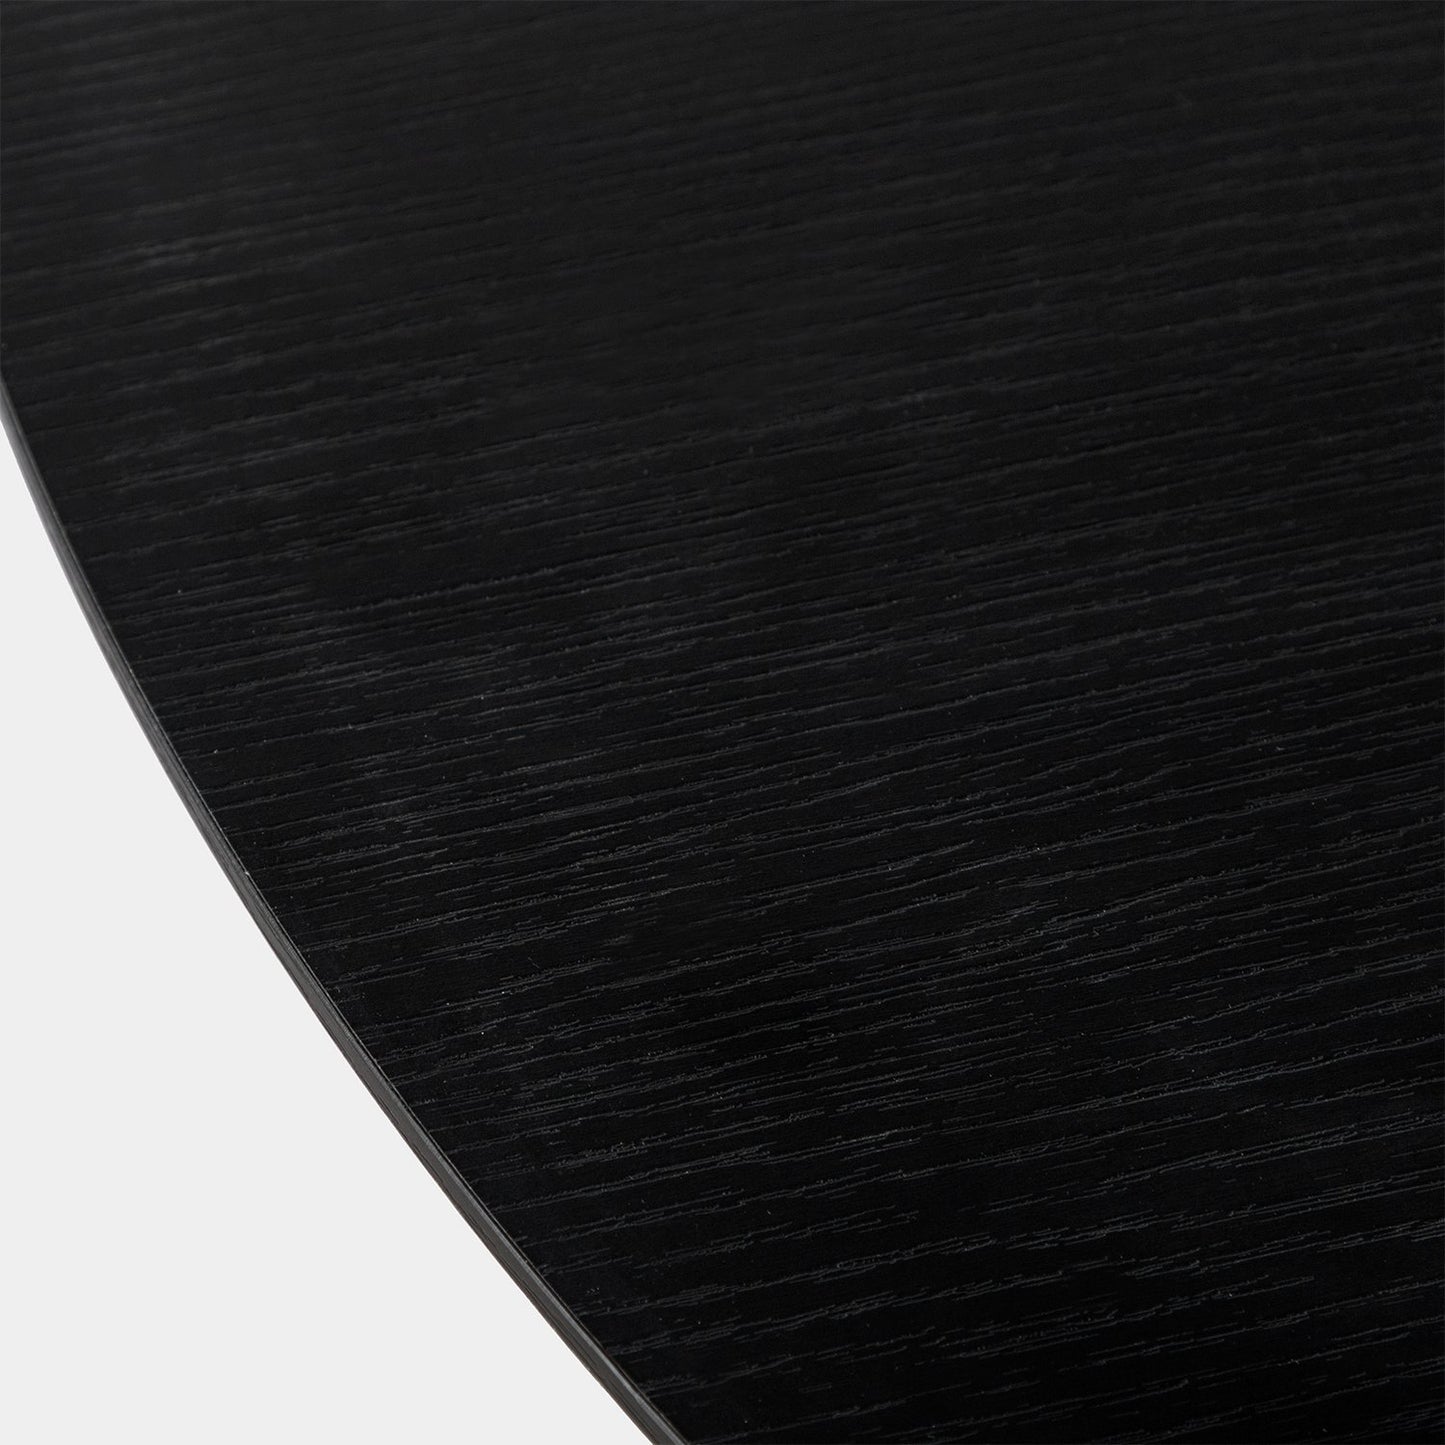 Mesa de comedor redonda Ø120 en madera color negro Olivier -  Klast